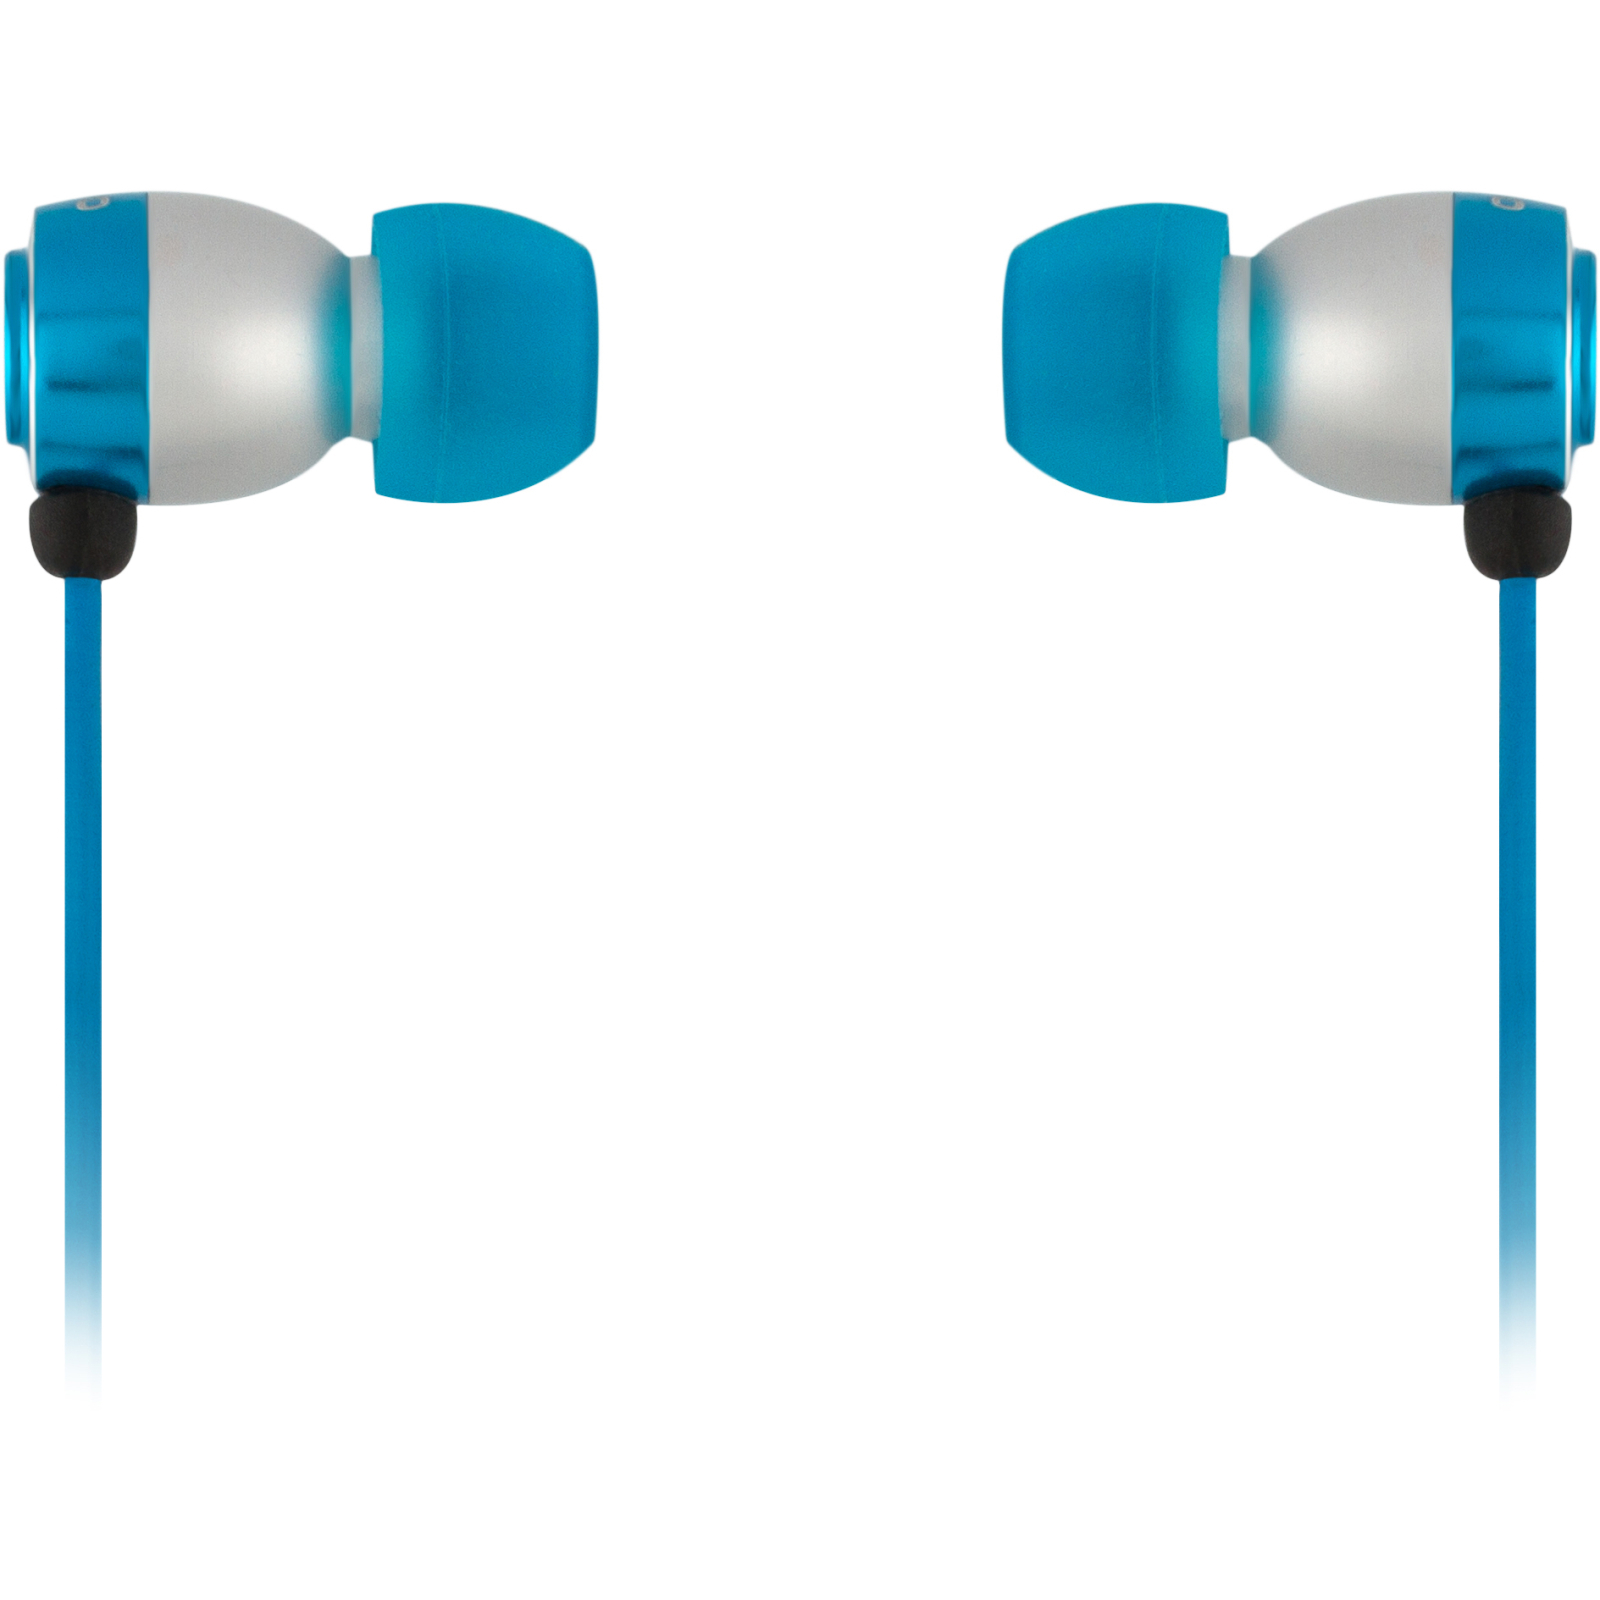 Навушники Ovleng iP660 Blue (noetip660bl)